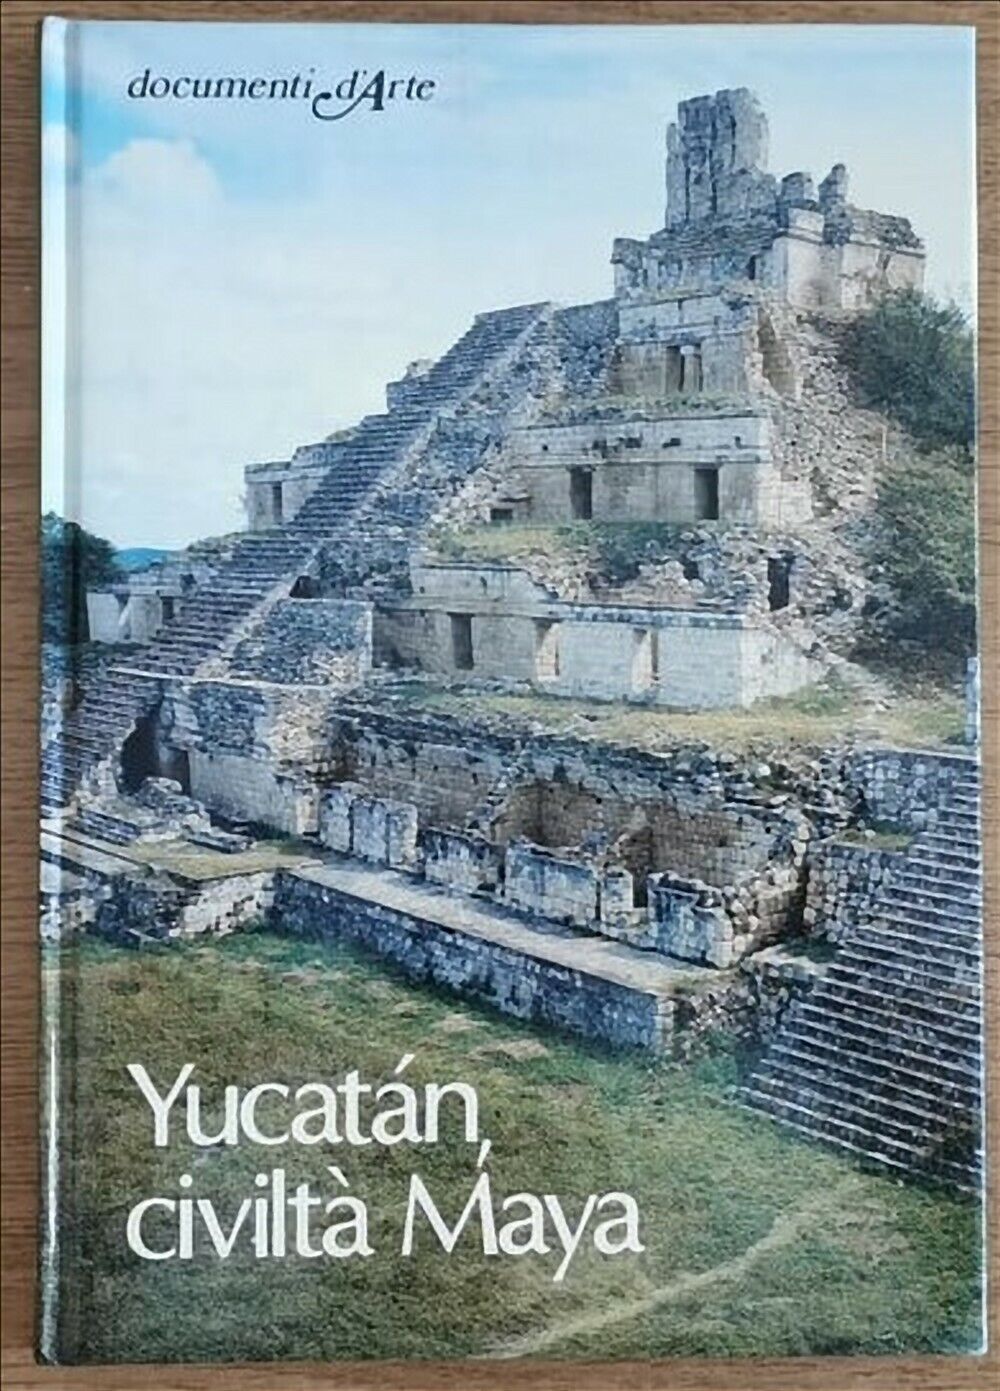 Yucatan, civilt? Maya - M. Sartor - De Agostini - 1982 - AR